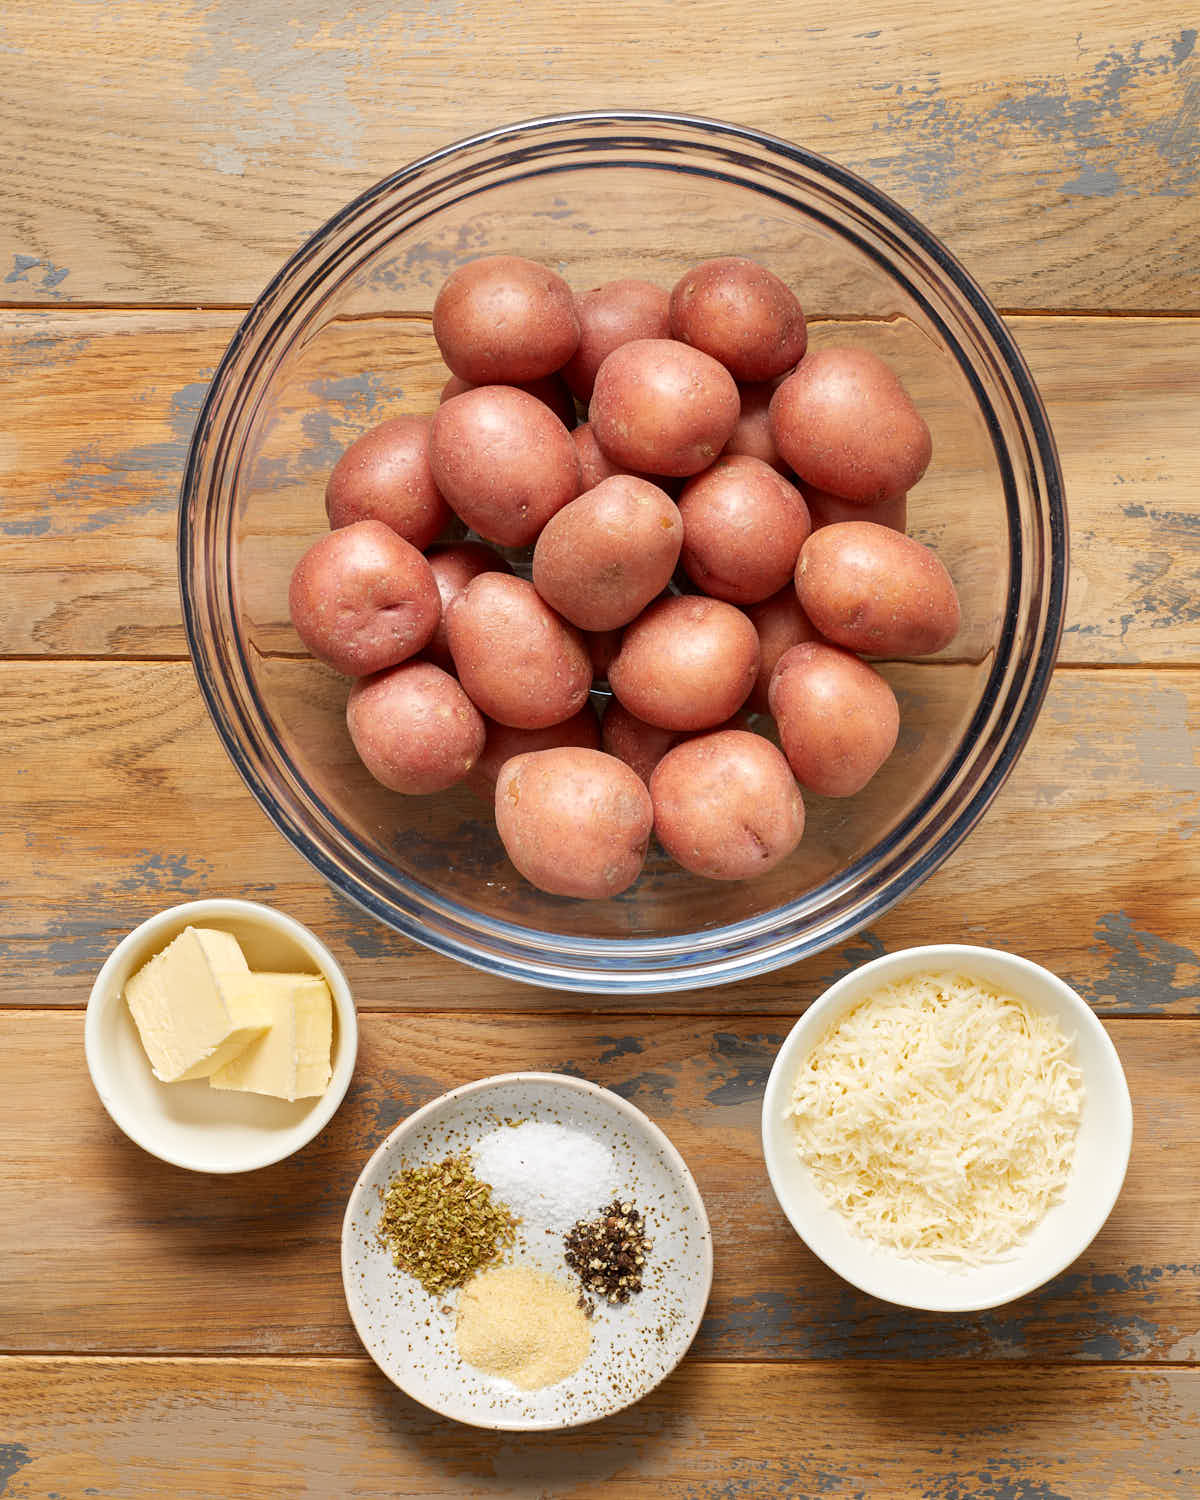 Ingredients to make air fryer parmesan potatoes arranged in individual bowls.